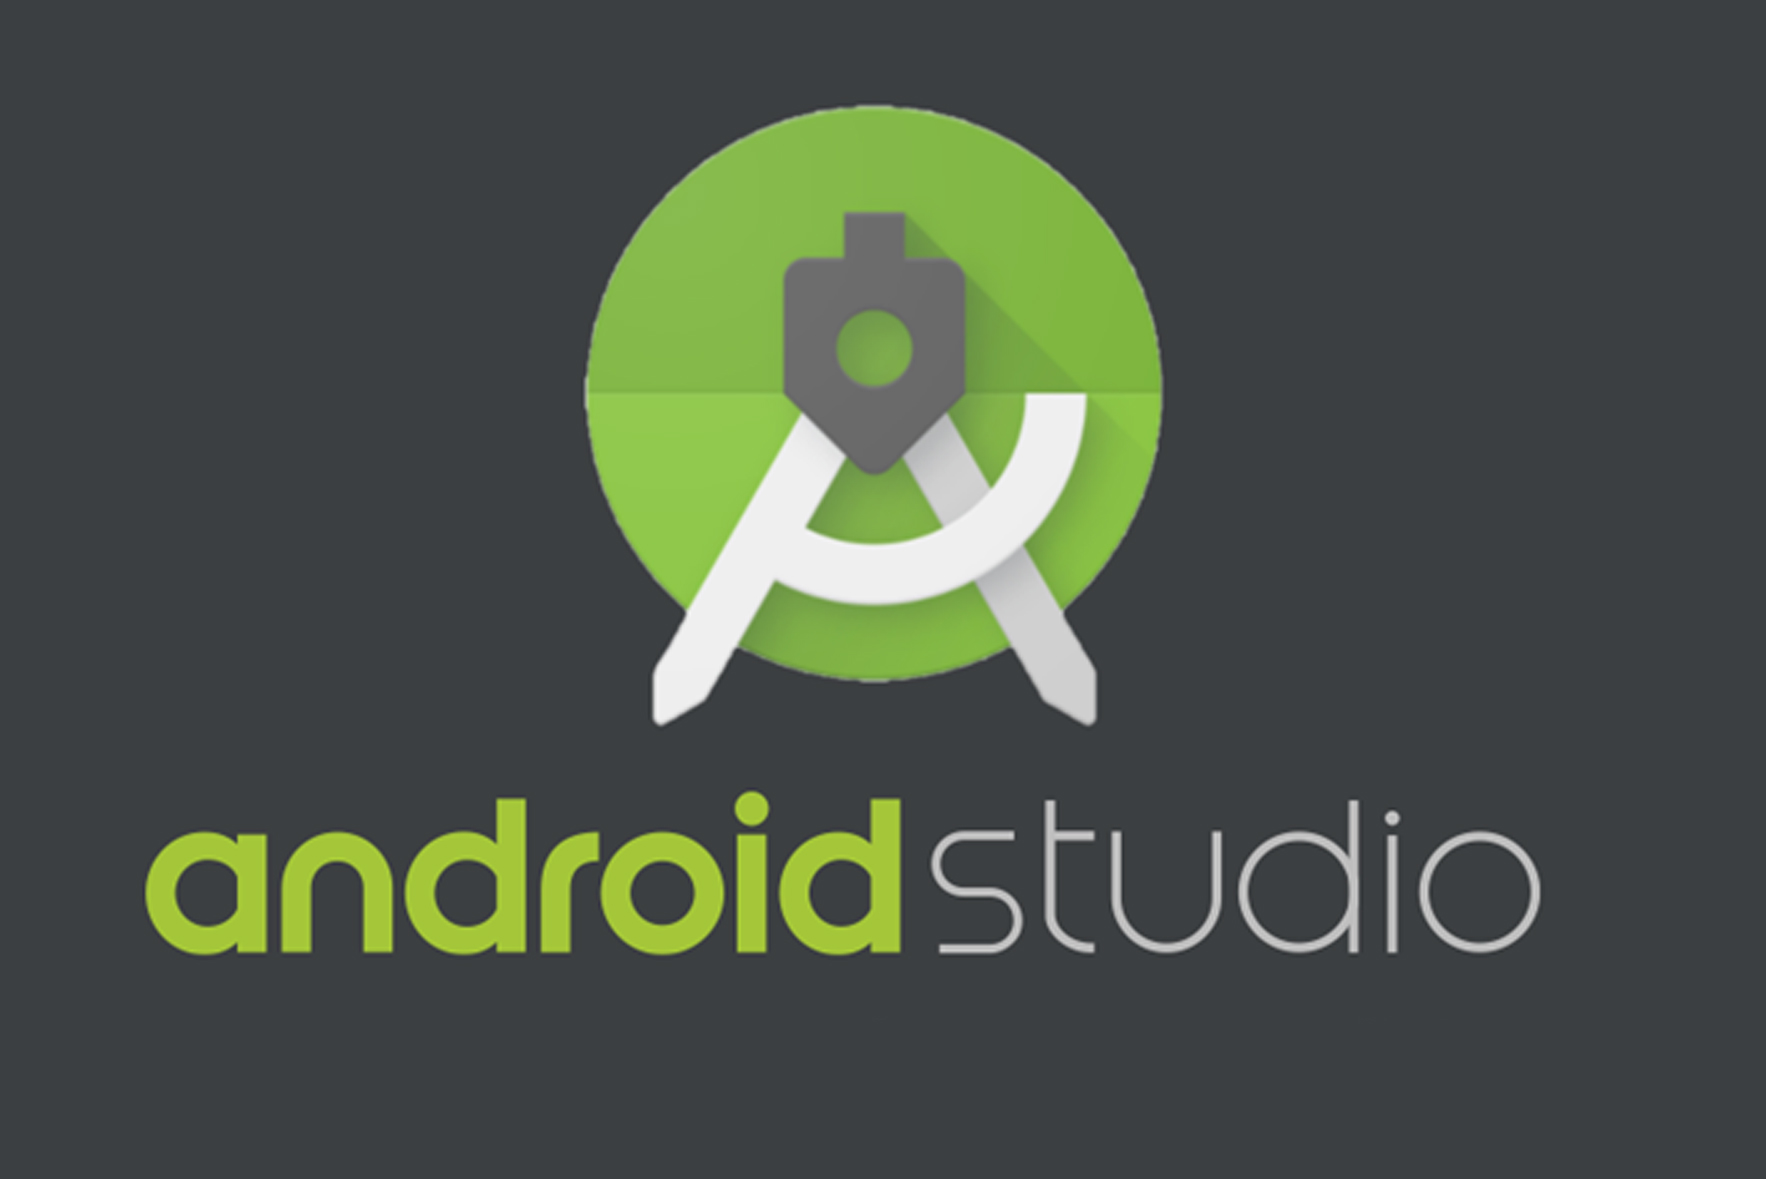 Android studio games. Android Studio. Android Studio последняя версия. Android Studio логотип. Среда разработки Android Studio.